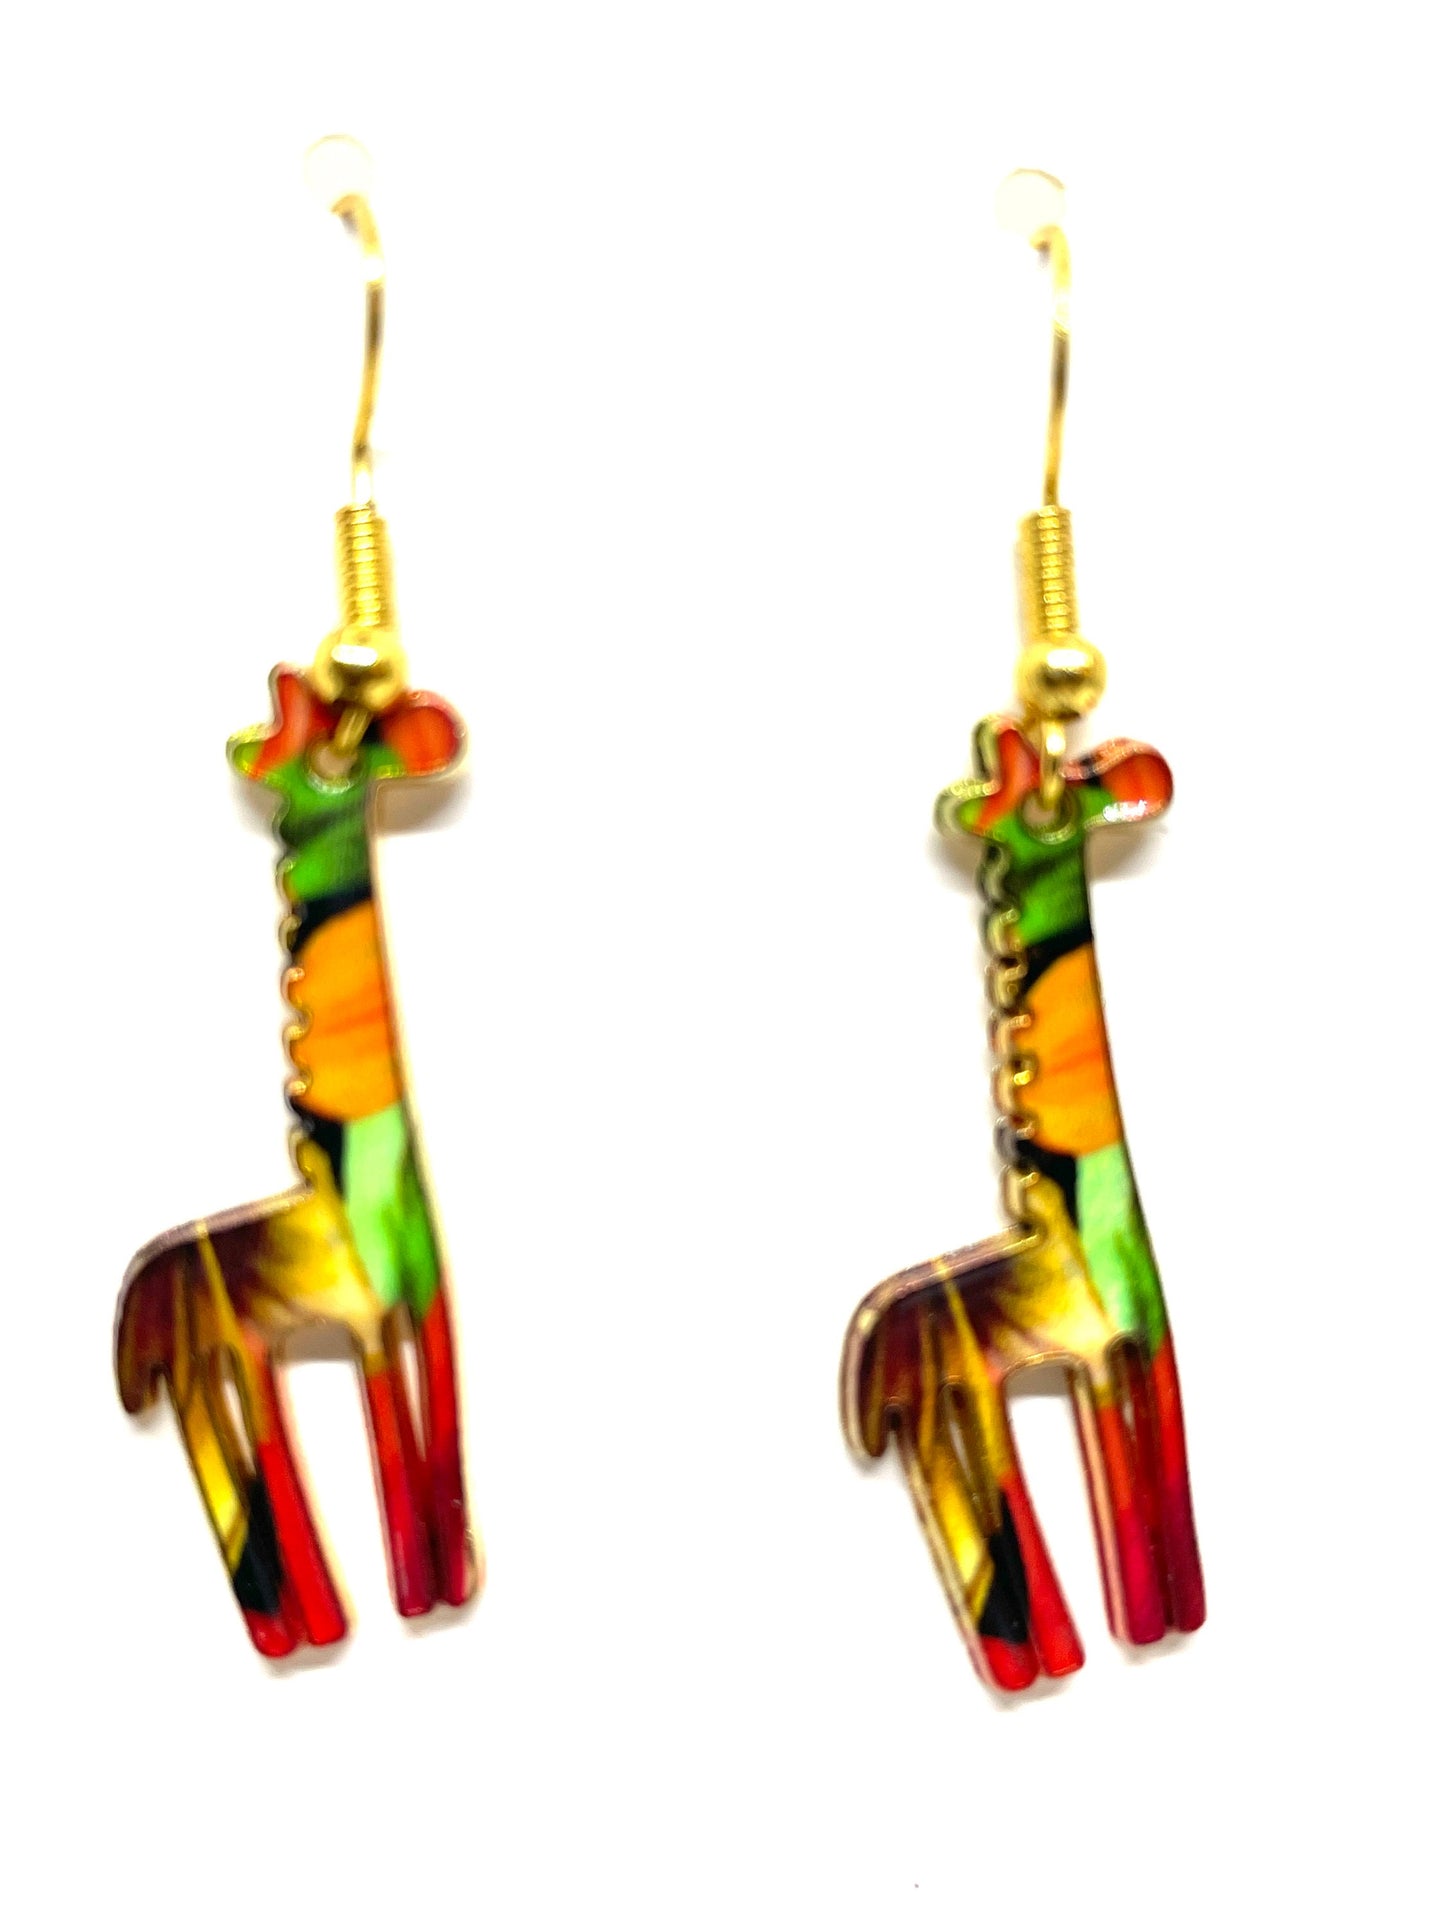 Giraffe Earrings, Stylish Giraffe Earrings, Colorful Giraffe Earrings, Giraffe Jewelry, Wildlife Themed Jewelry, Gift for Her, Christmas